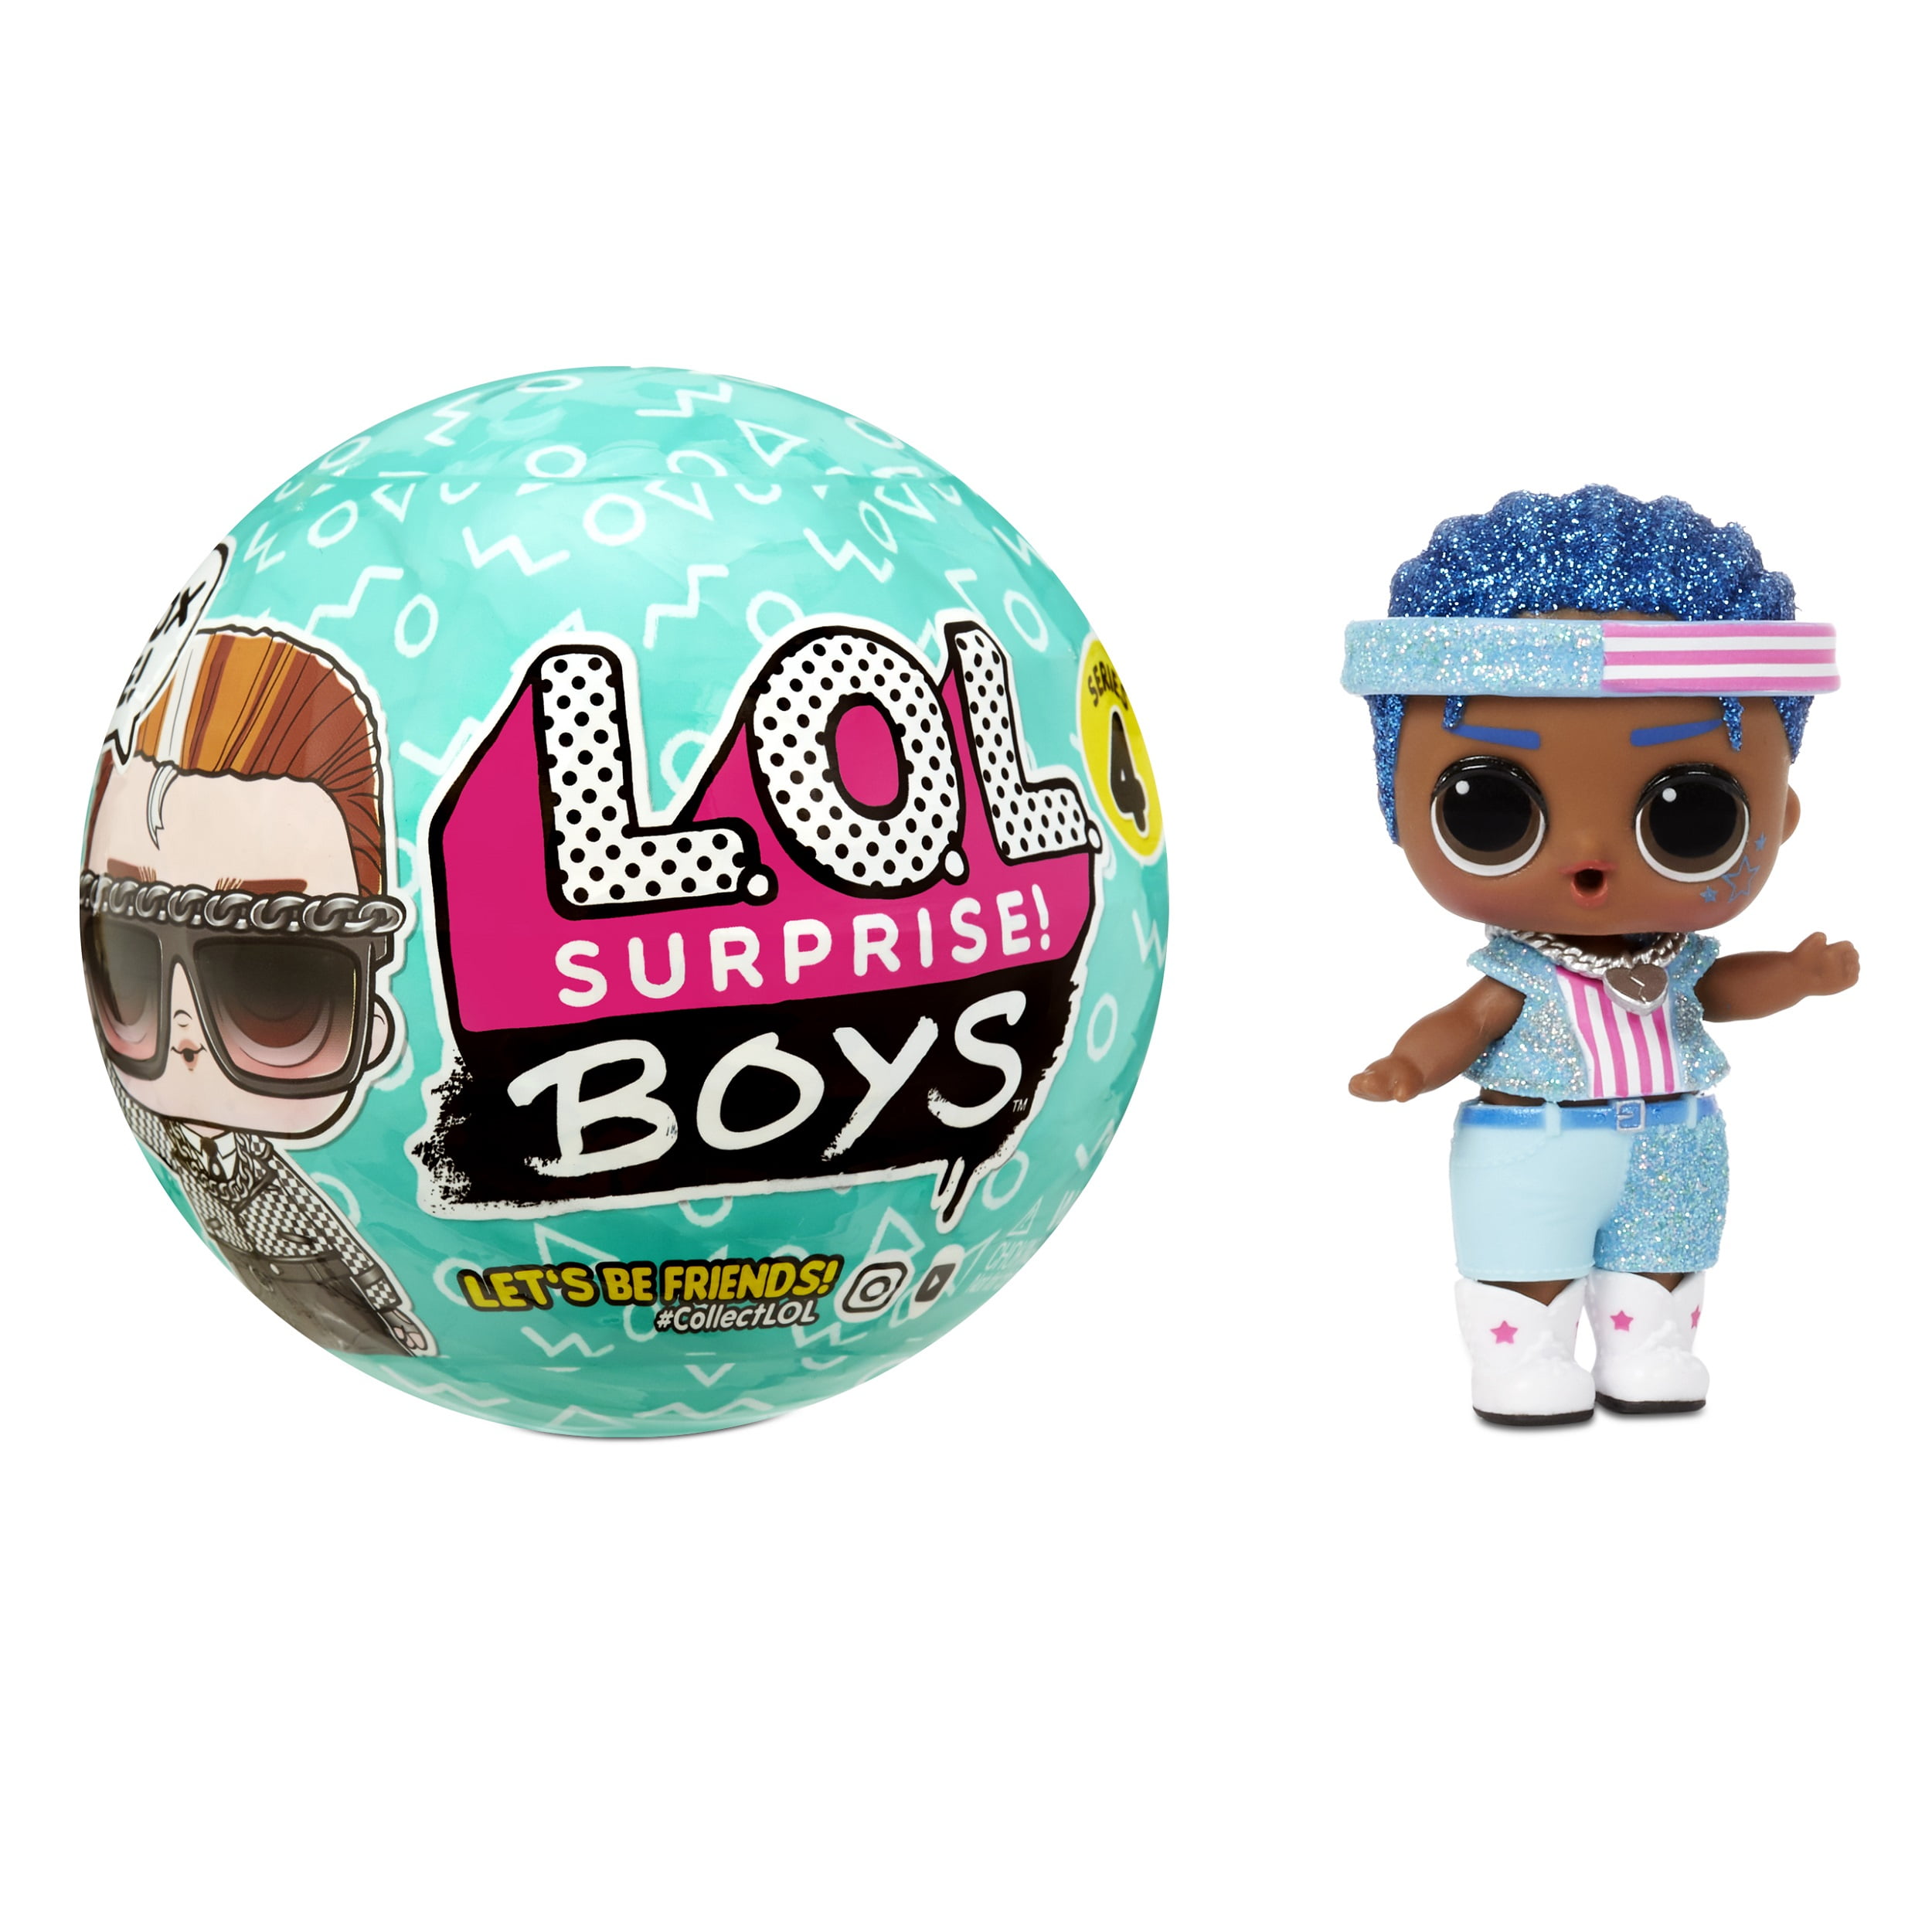 Surprise Details about   L.O.L Action Figure Doll with 15 Surprises Boys Arcade Heroes